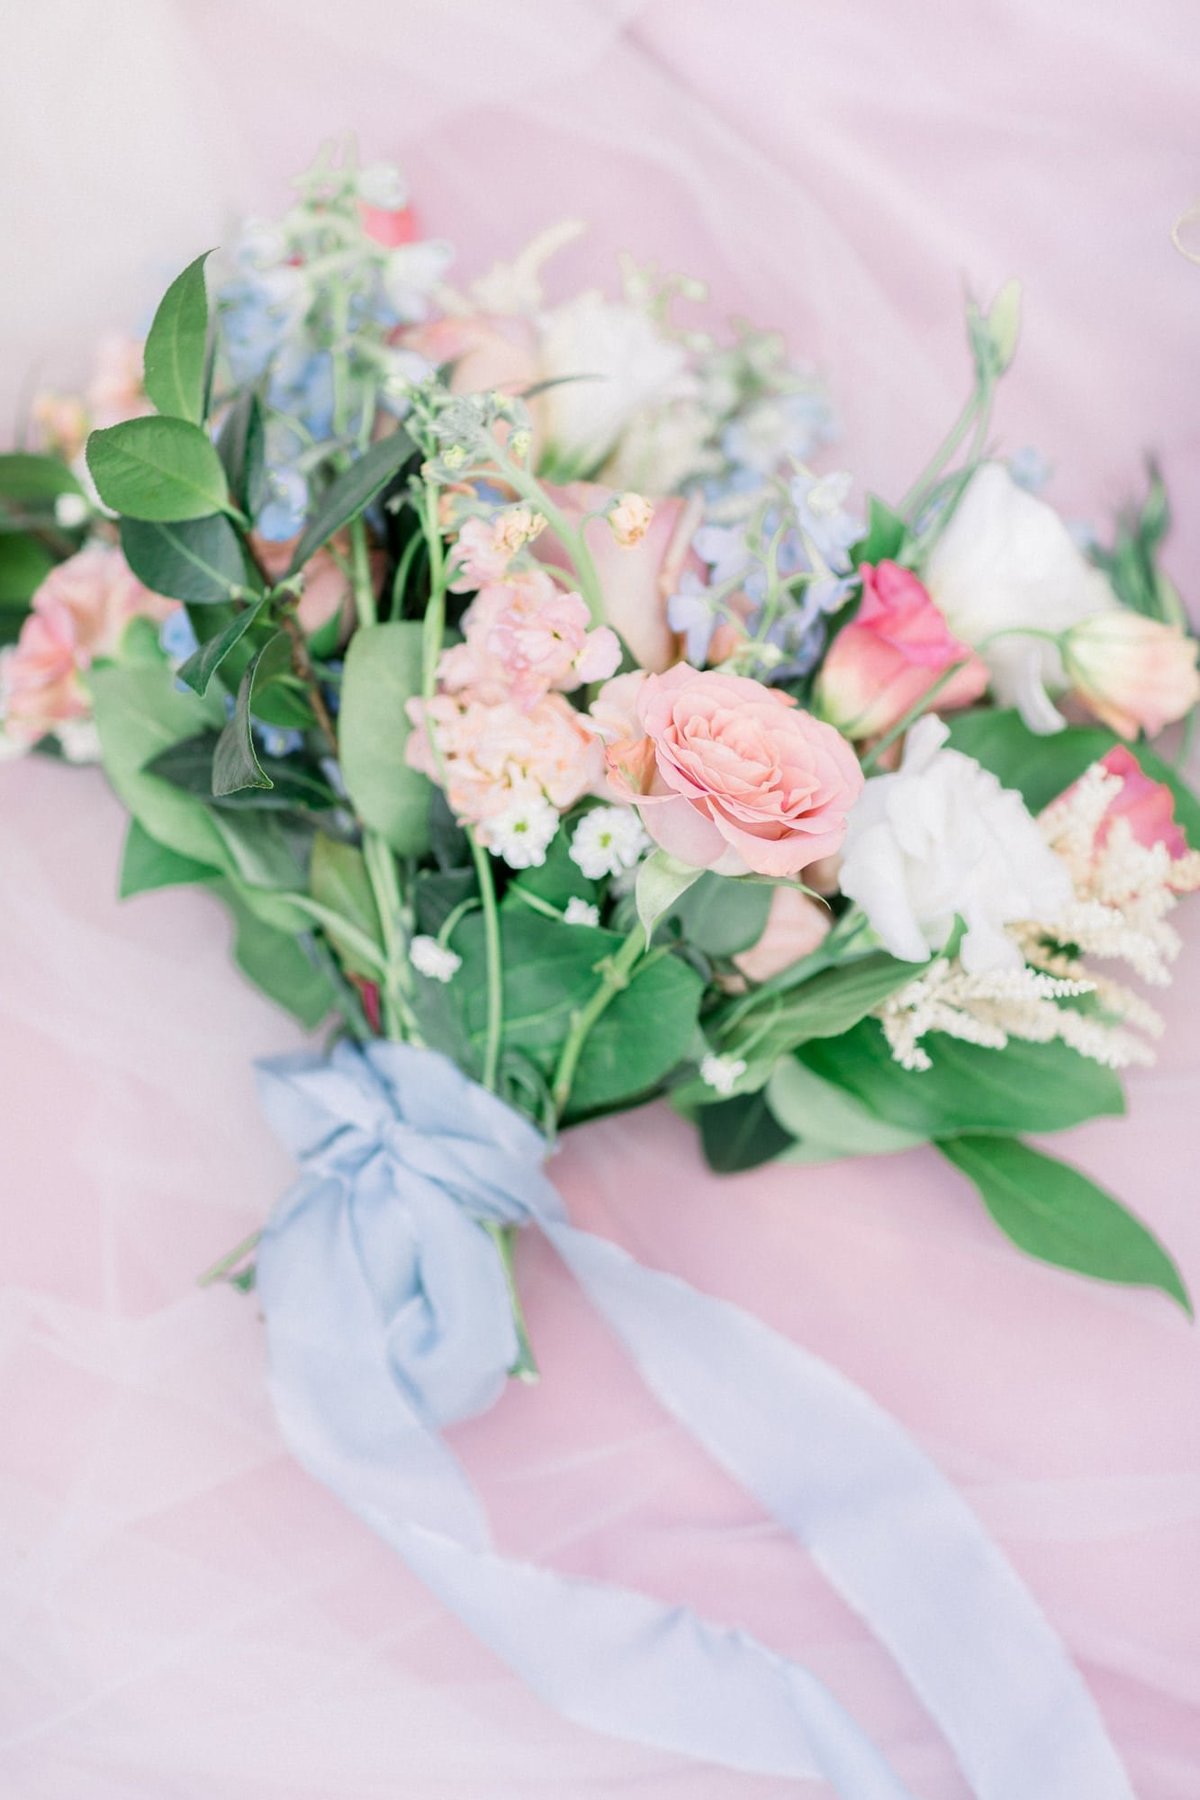 Bride's beautiful bouquet of flowers